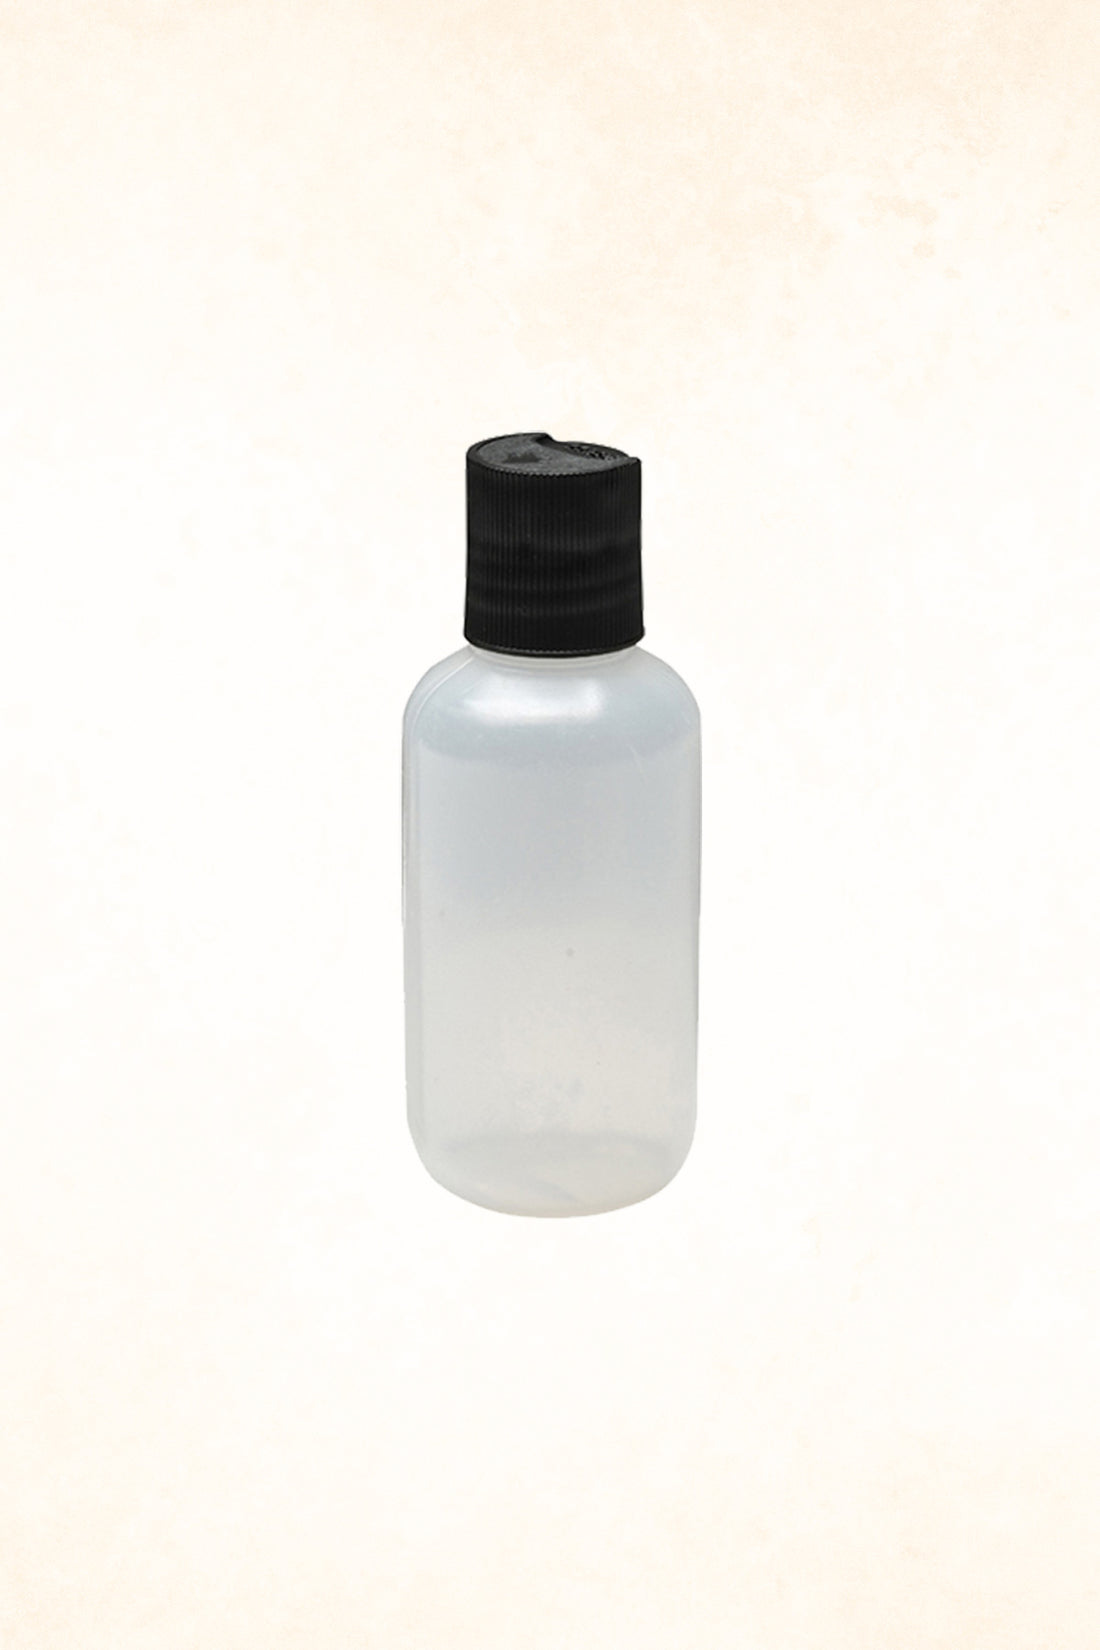 Monda Studio - Disposable Press Cap Bottle 2 oz / 56,70 Grams - MST-203-2